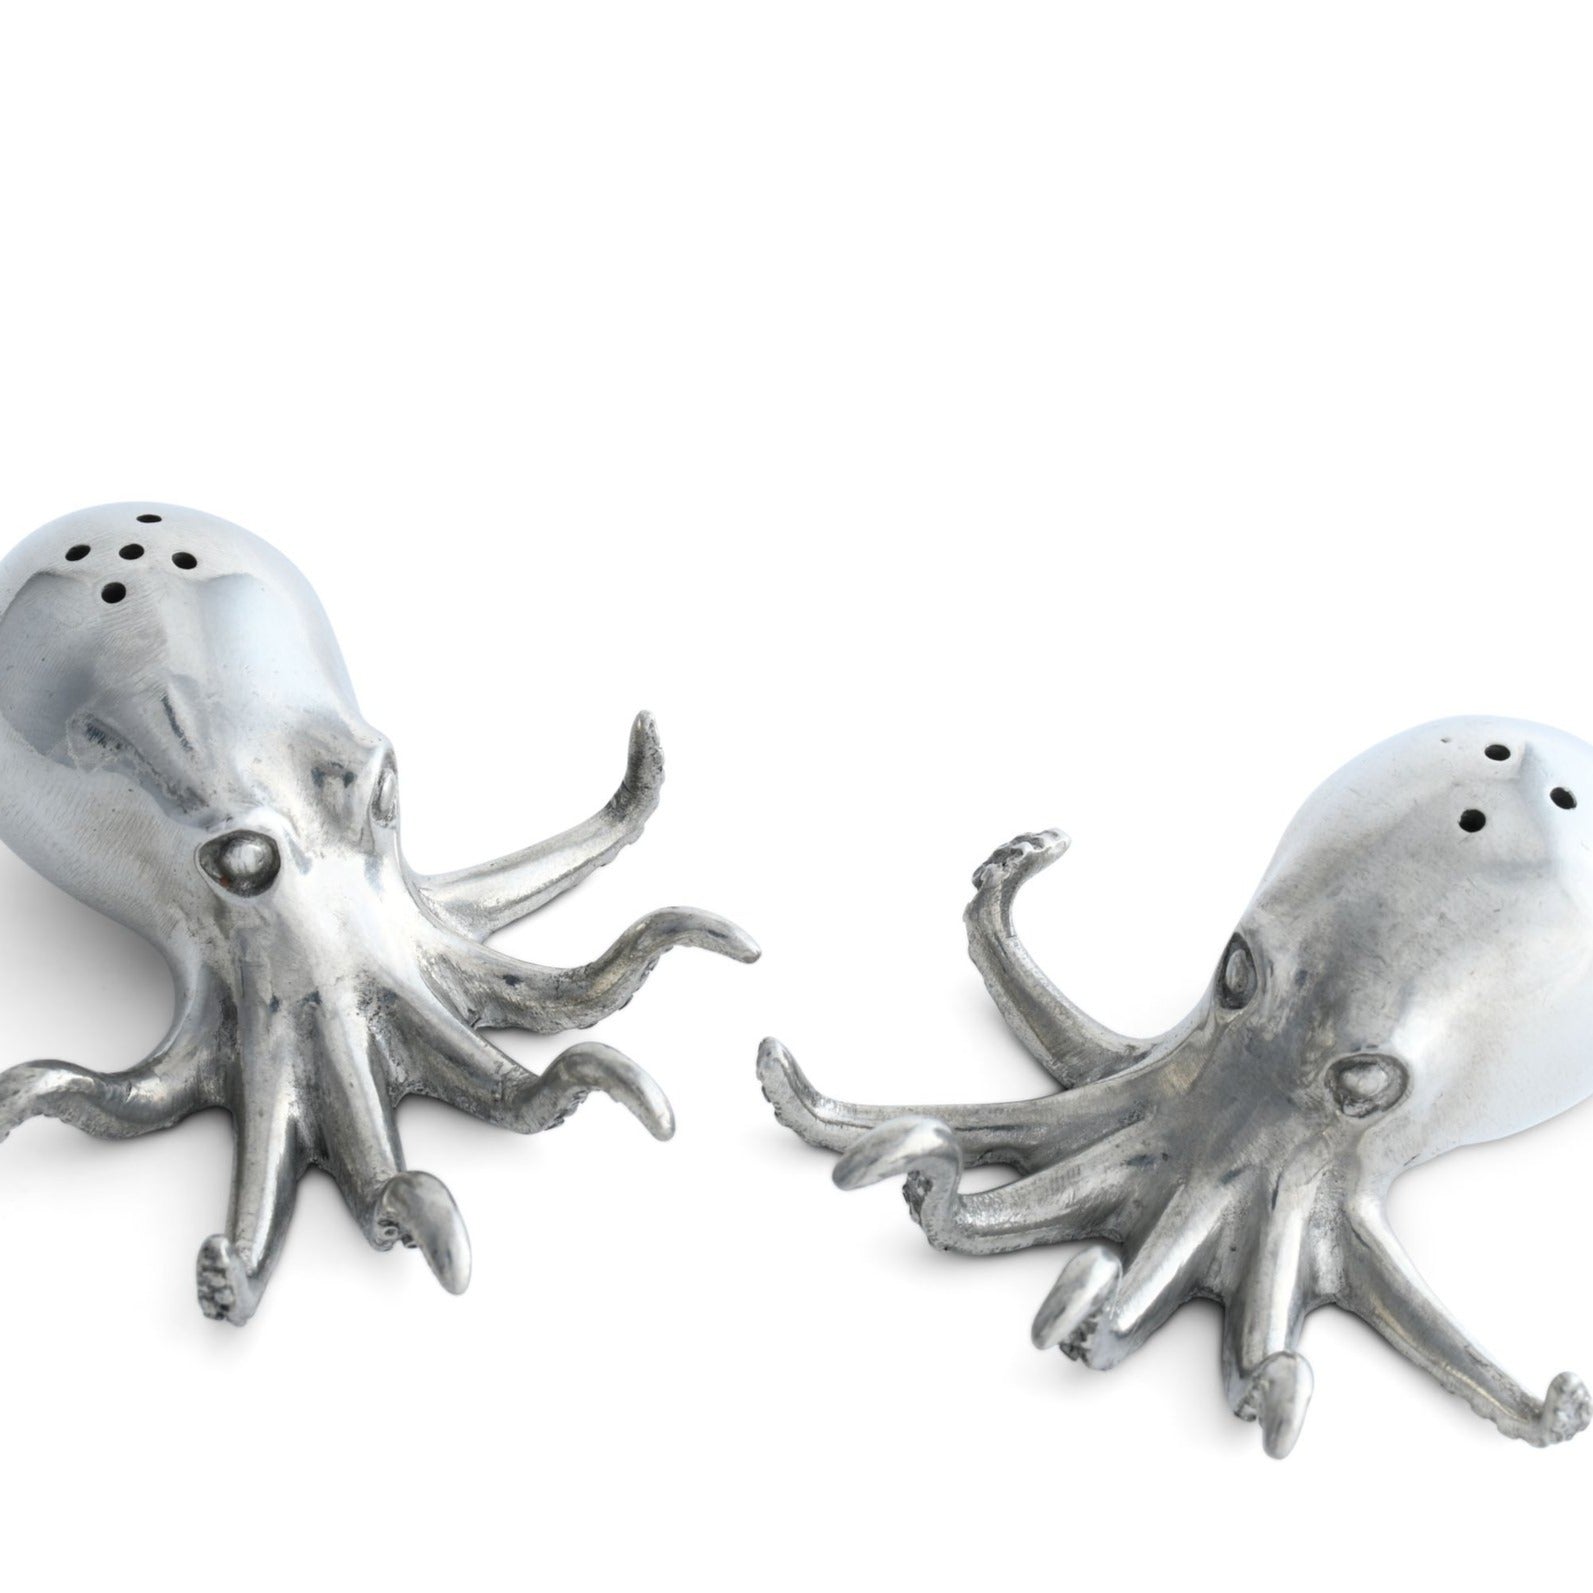 Octopus Kraken Pewter Salt and Pepper Set - Timothy De Clue Collection 